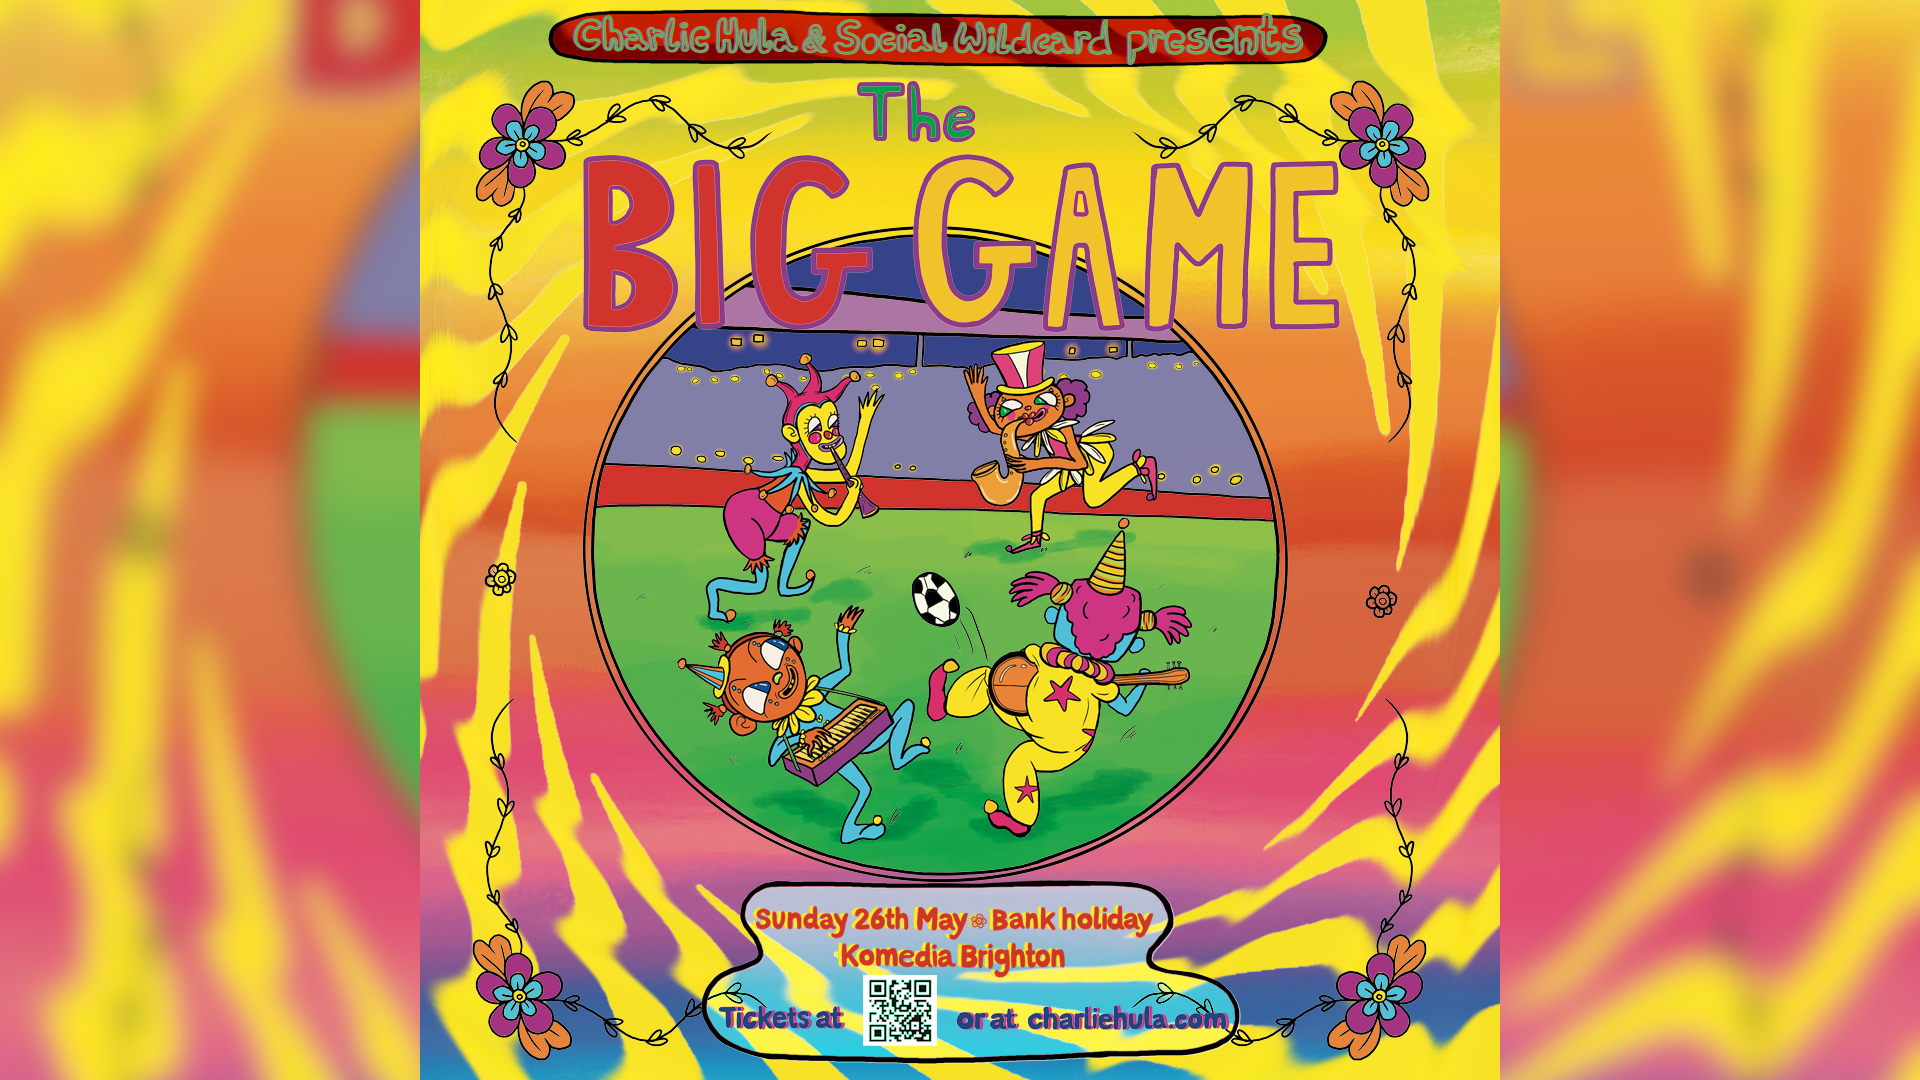 THE BIG GAME – KOMEDIA BRIGHTON